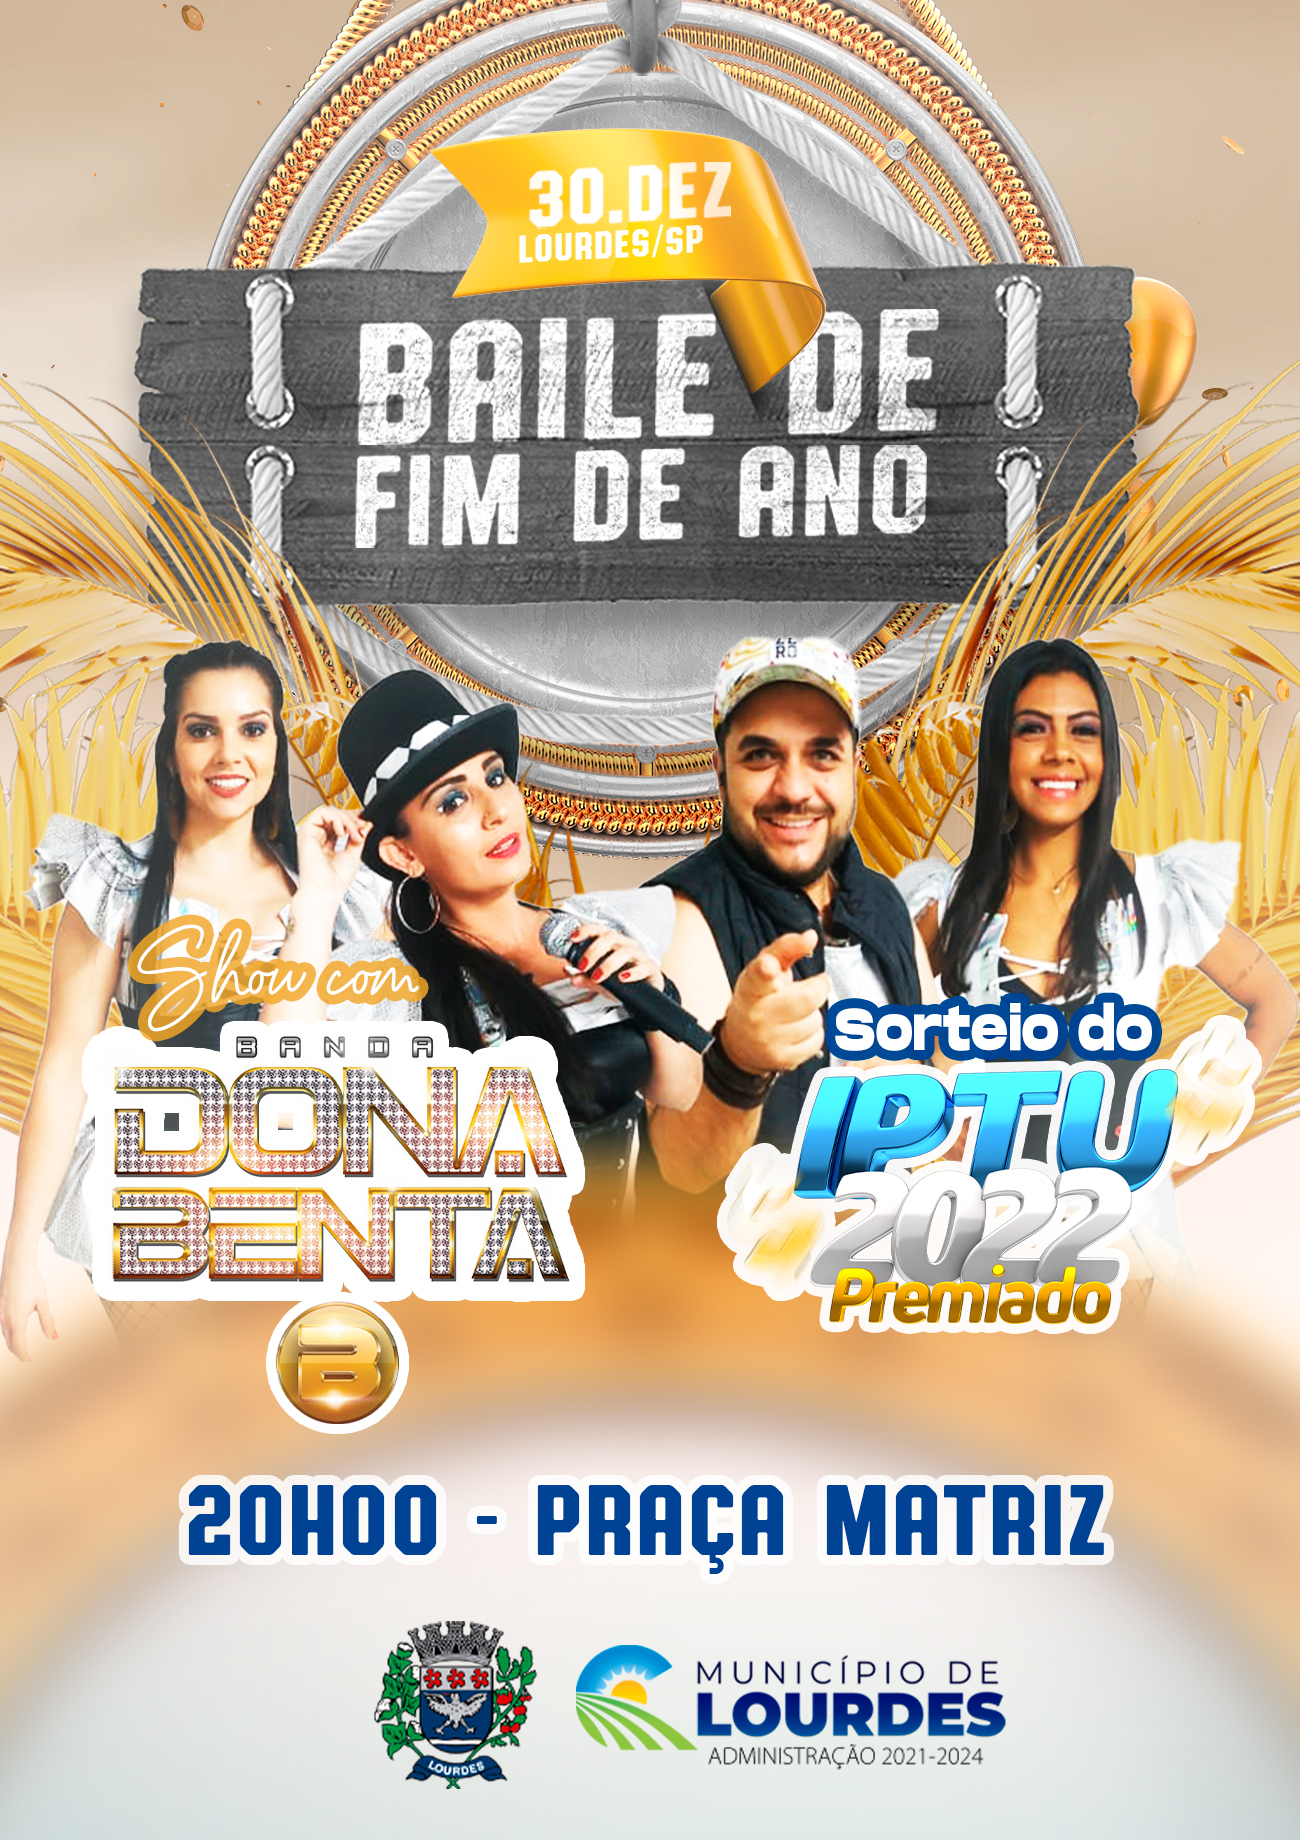 Live da Banda Dona Benta Show acontece nesta sexta-feira